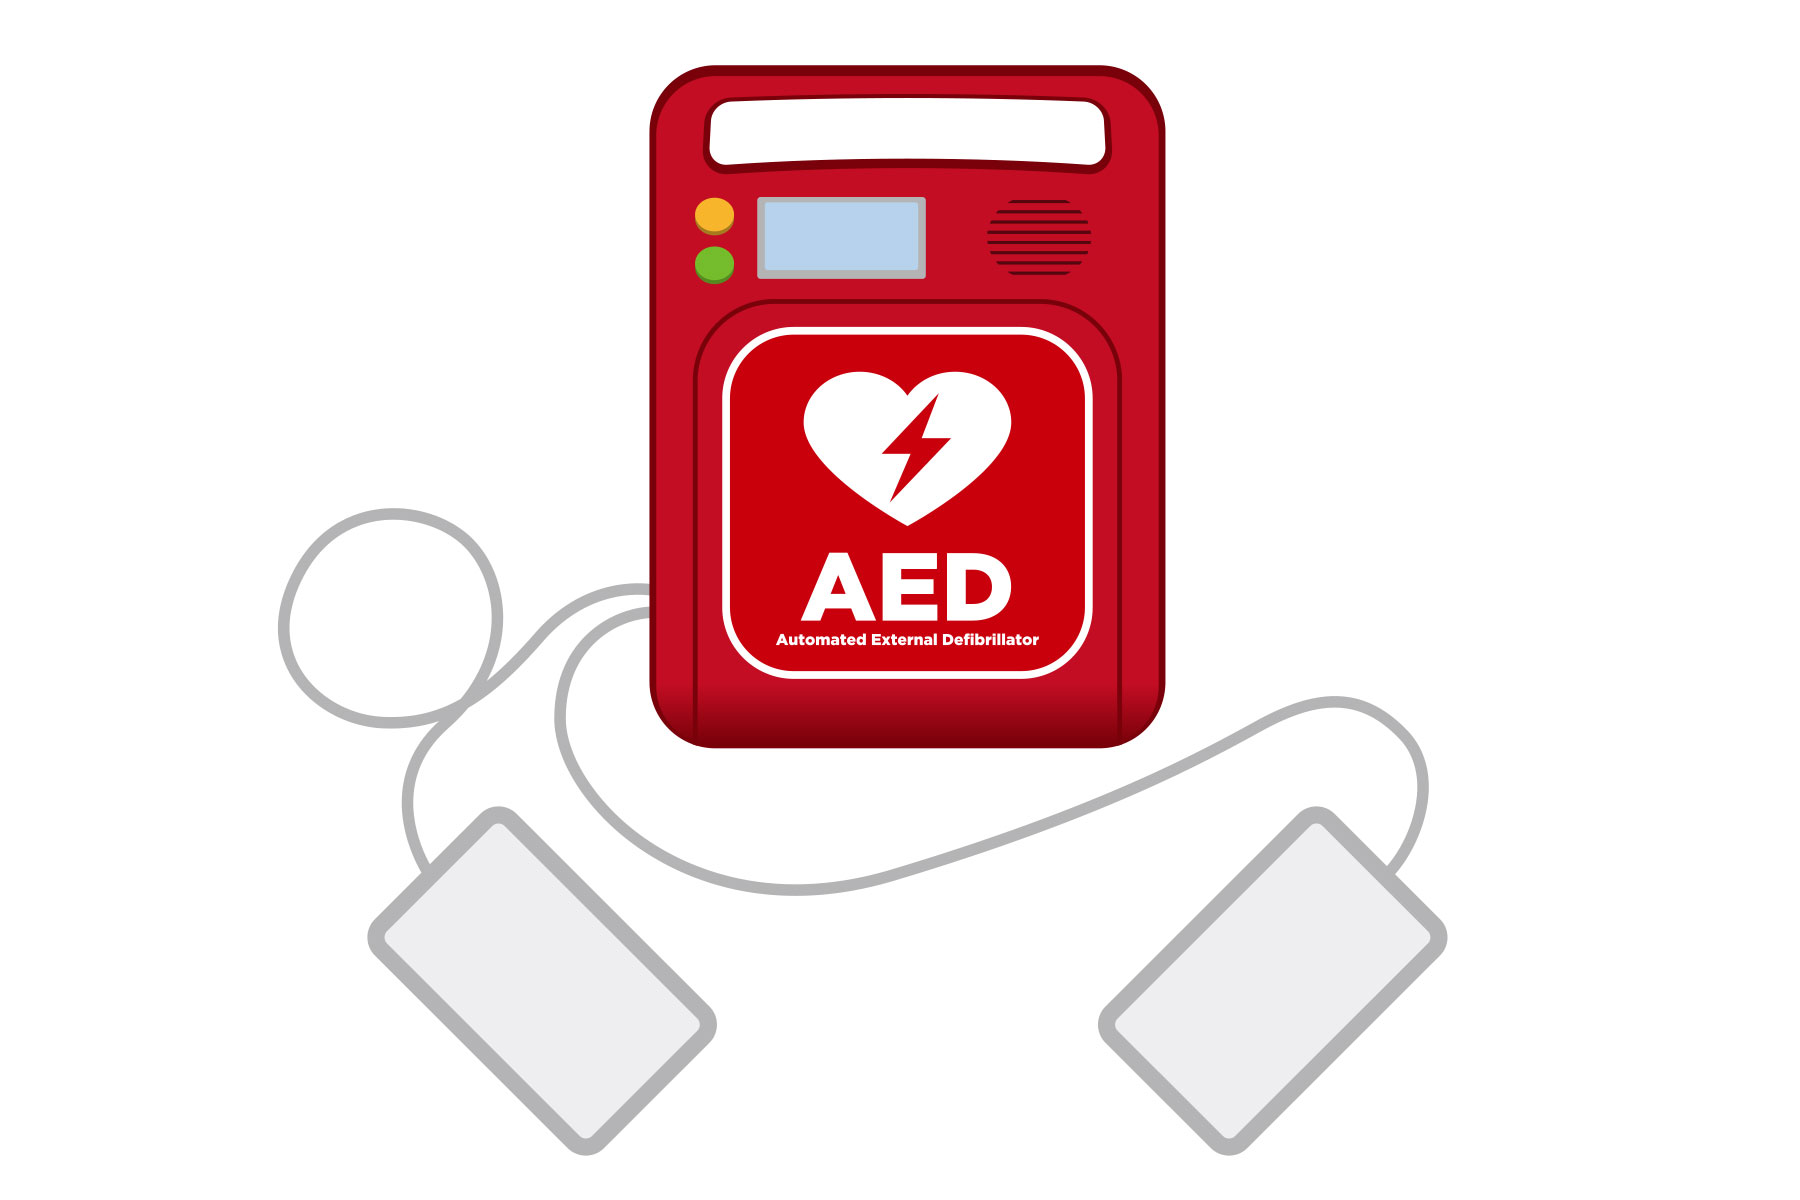 Co je AED a jak funguje?